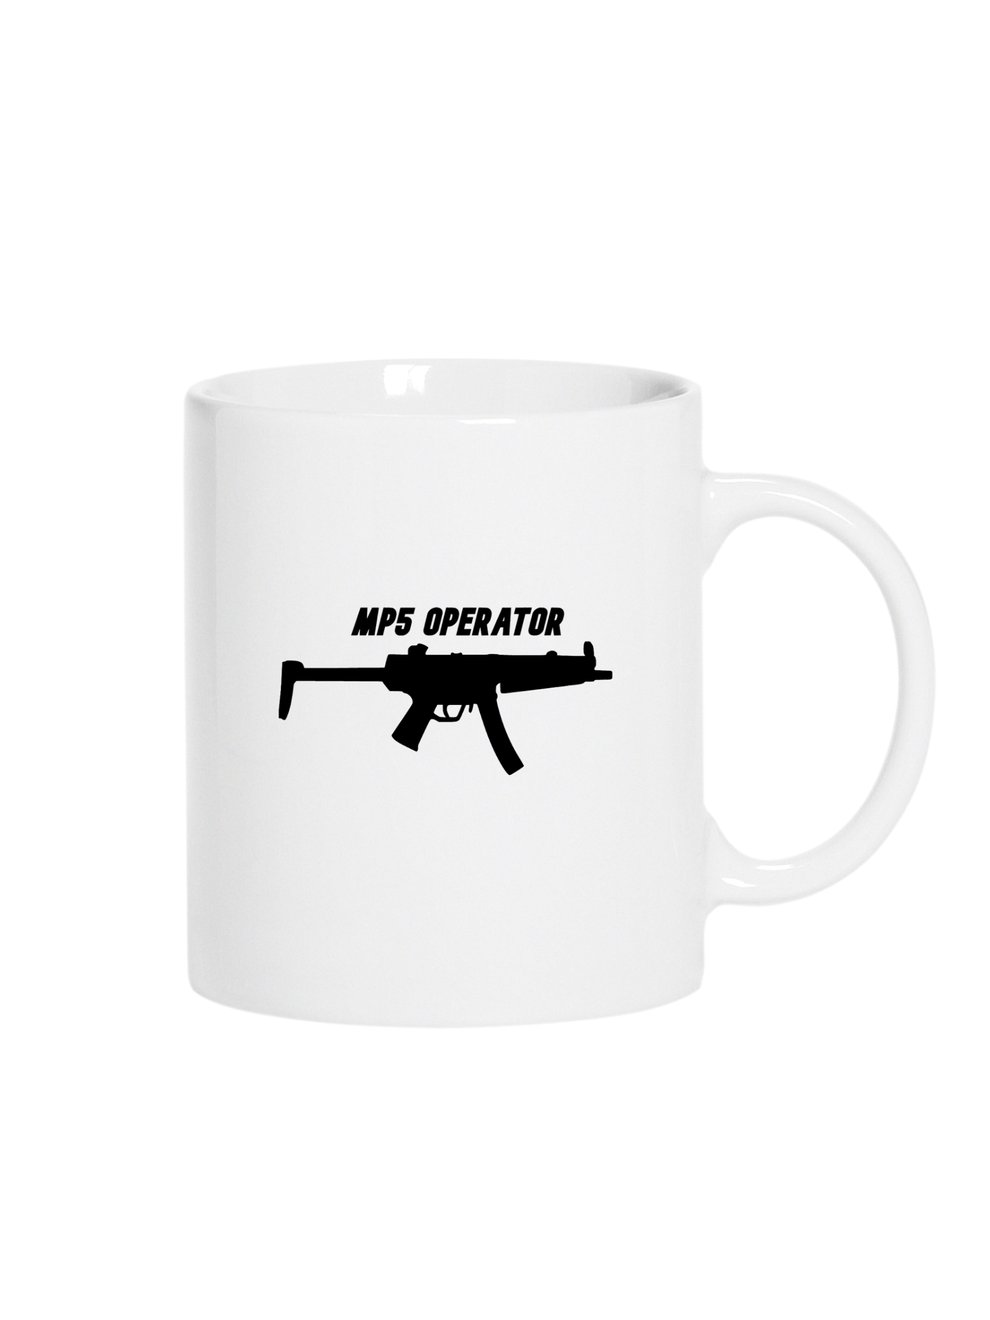 MP5 OPERATOR